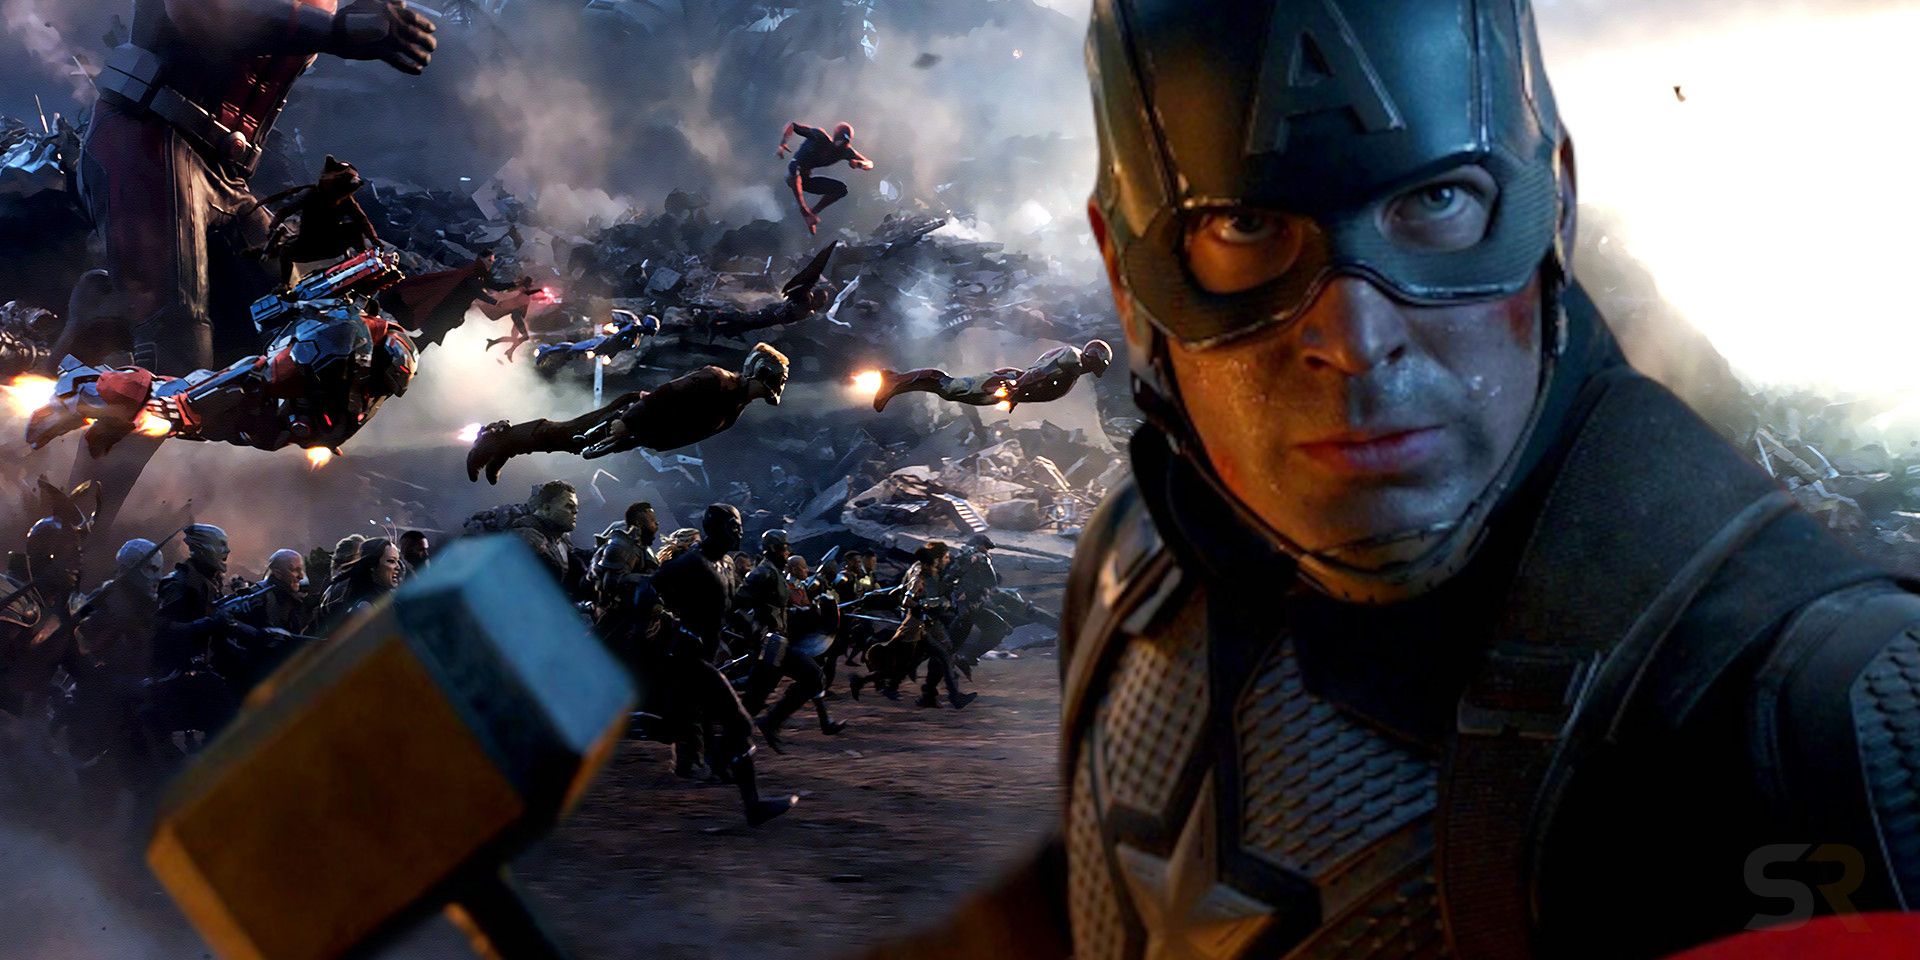 Avengers: Endgame' Spoilers: Biggest SAG Awards Cast in History